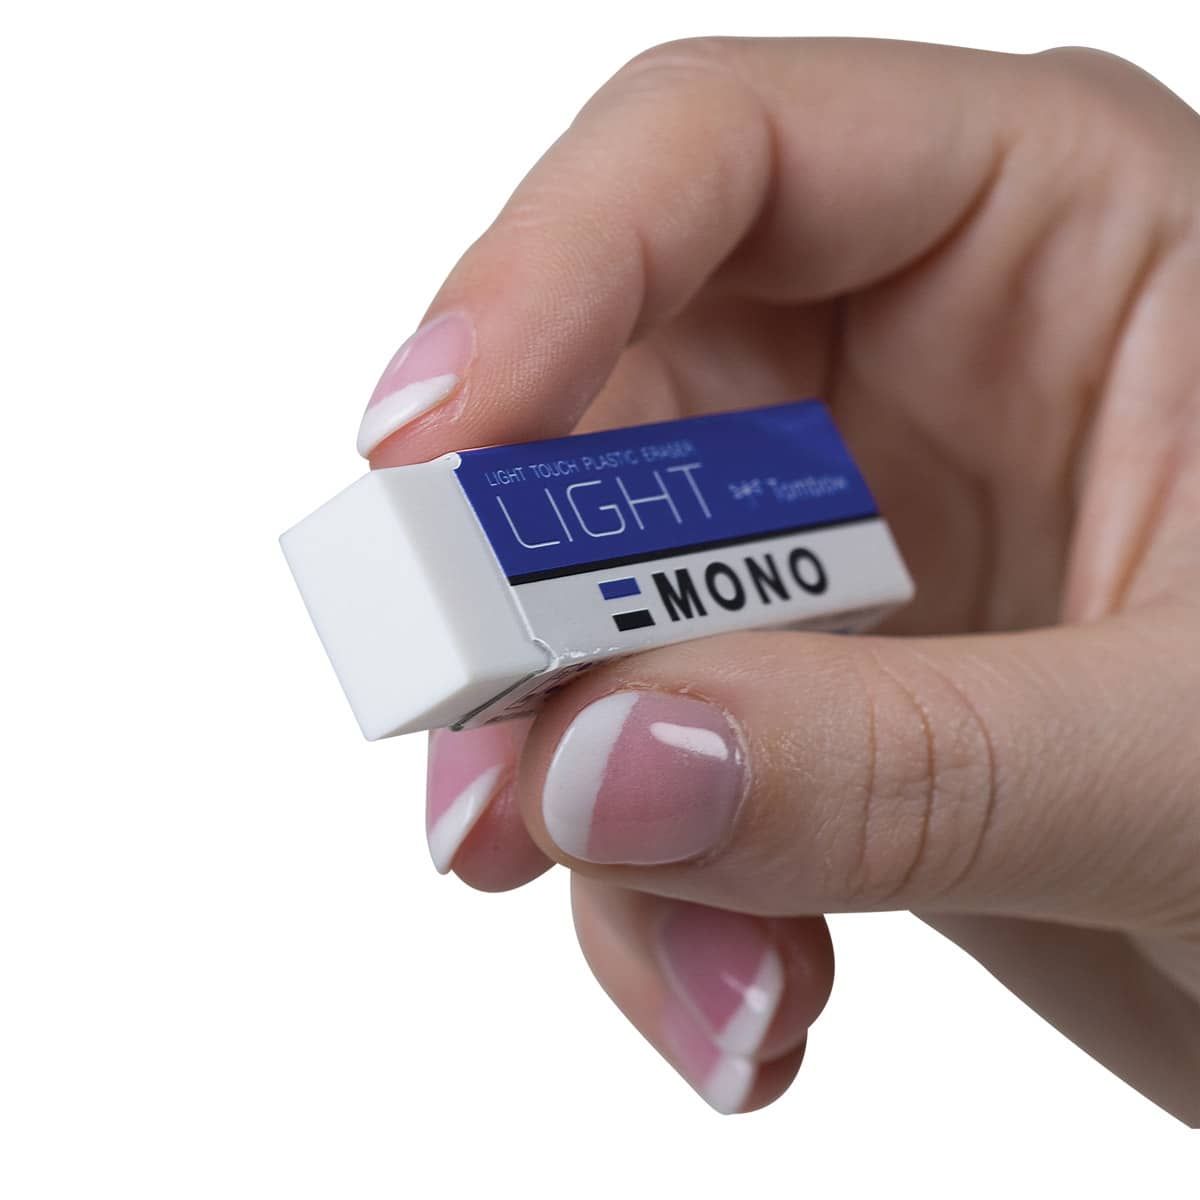 Tombow MONO Light Eraser Sets